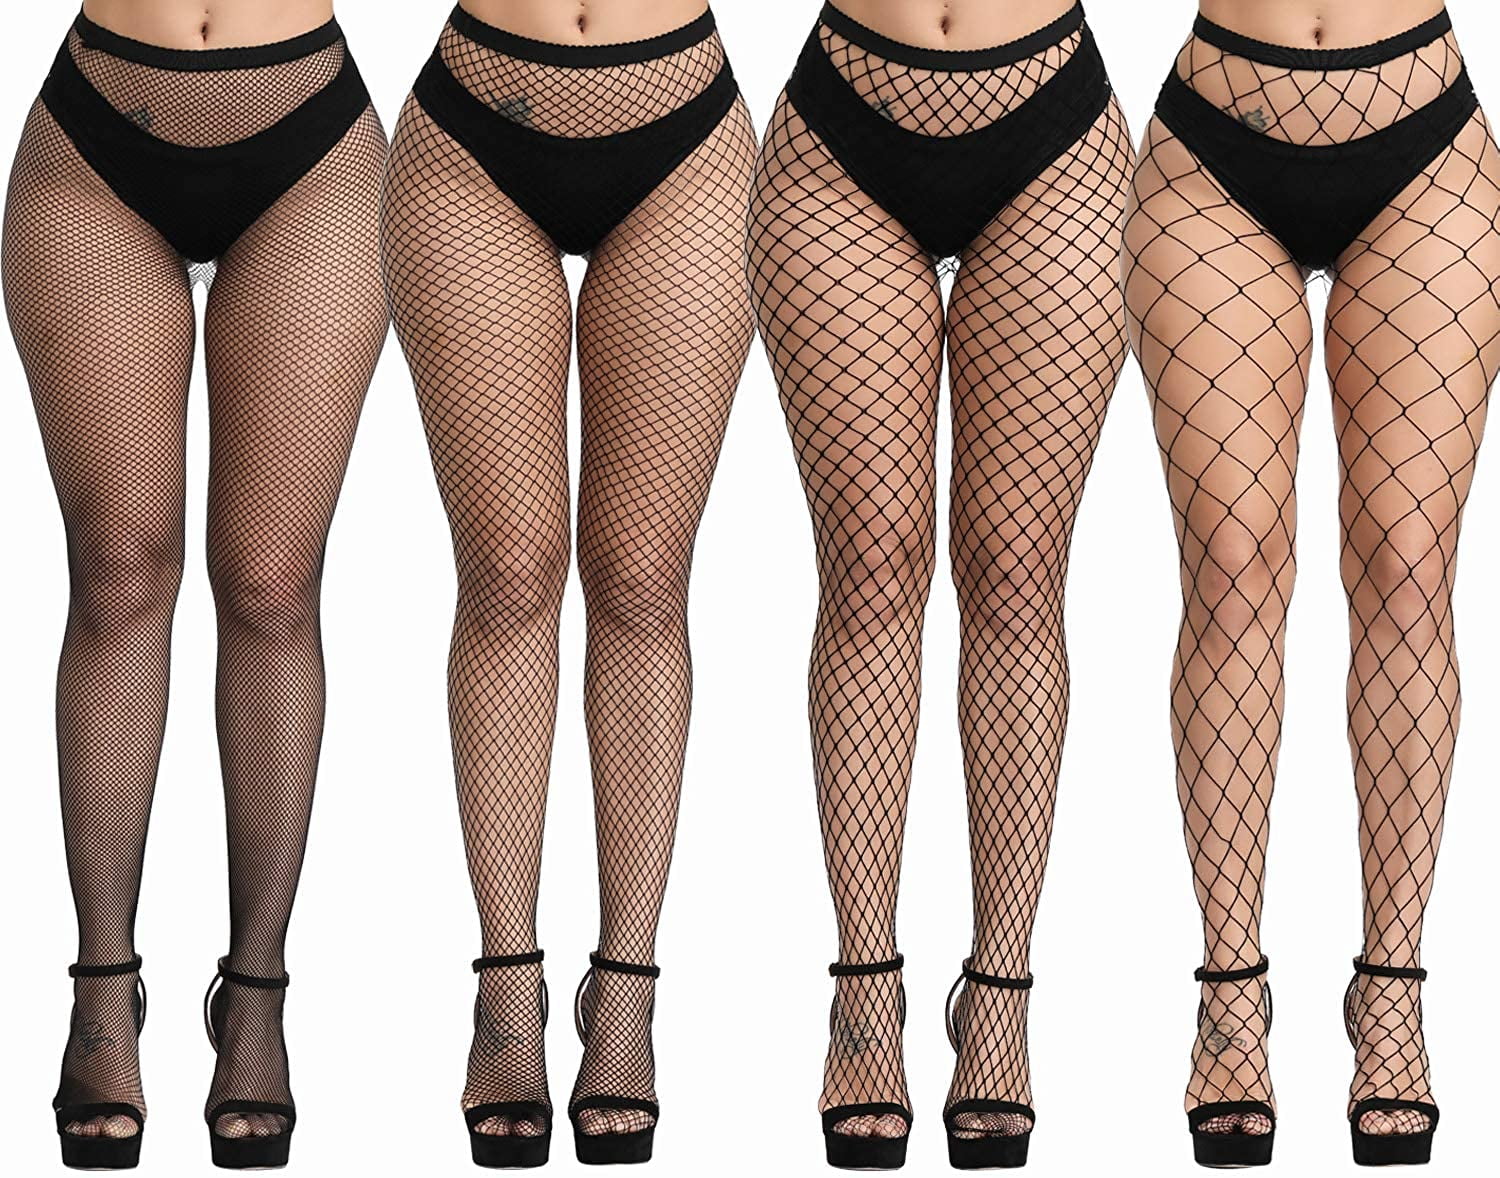 Plus Size Fishnet Stockings Black Fishnet Tights Thigh High Stockings Suspender Pantyhose 4 Pack